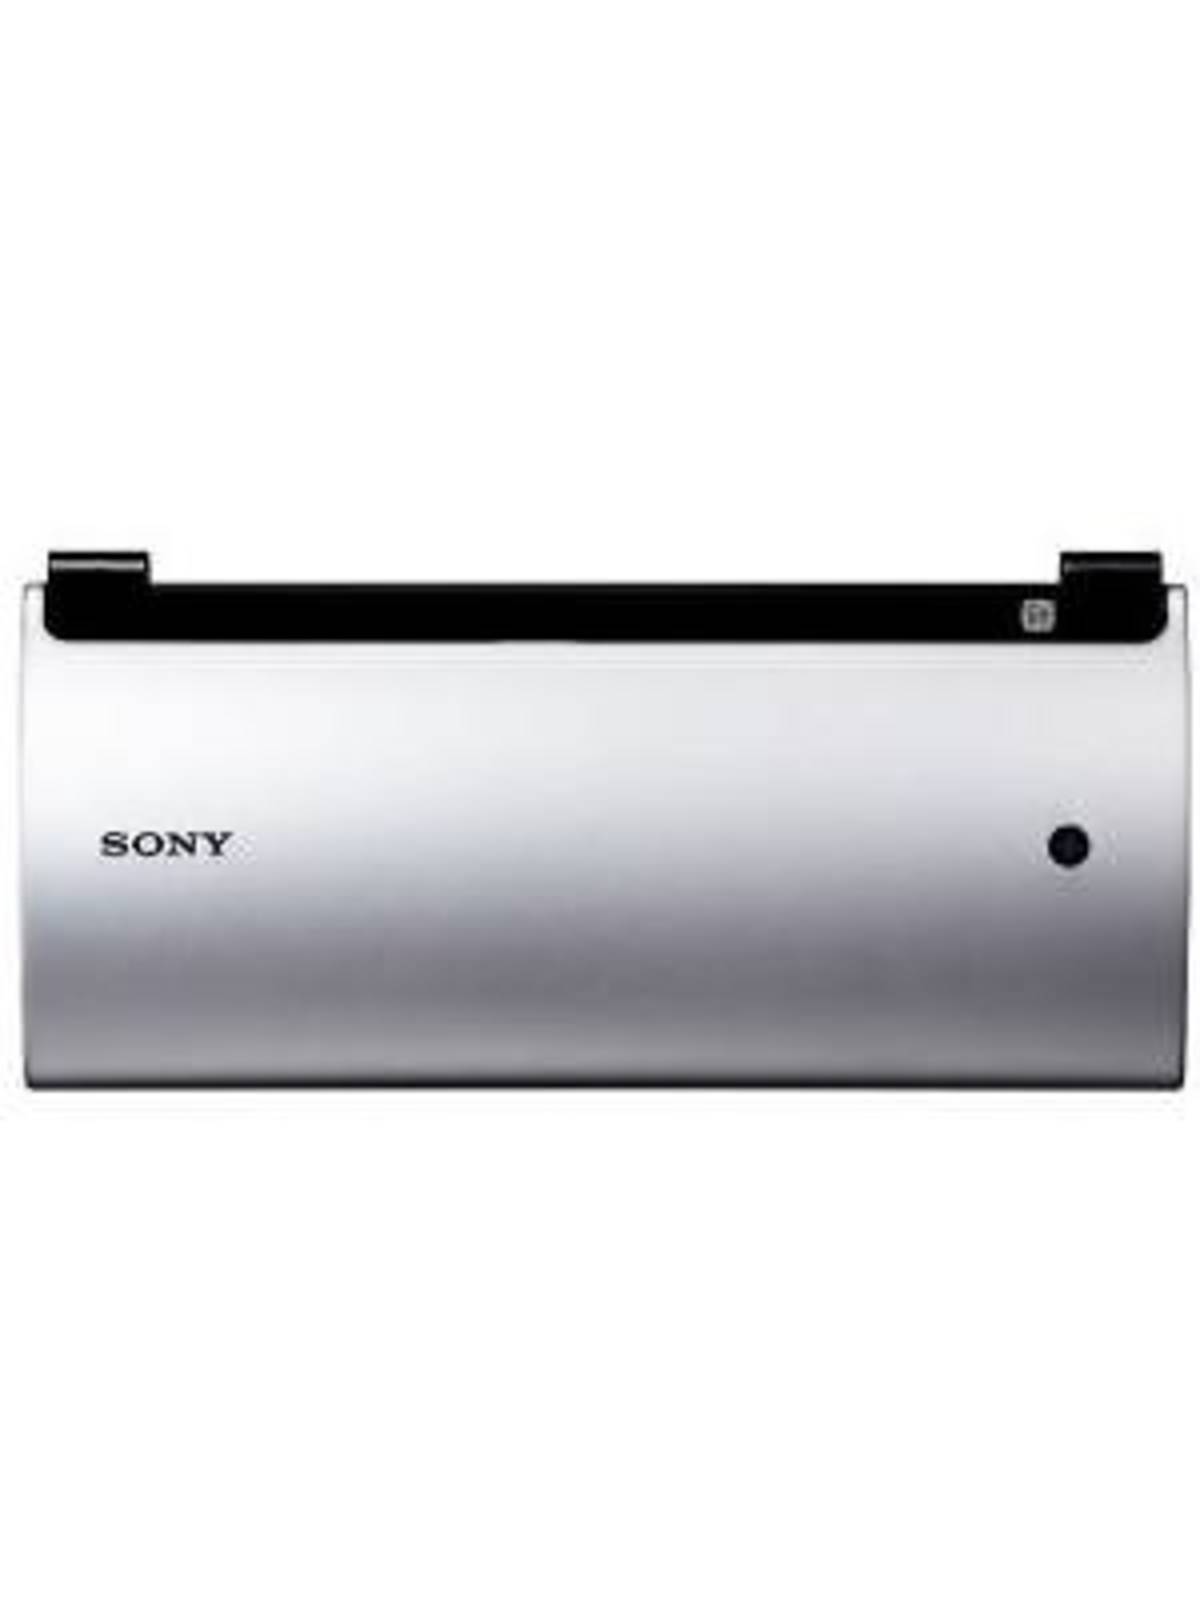 lovelani.com - Sony Tablet Pシリーズ 3G+Wi-Fiモデル 4GB SGPT2